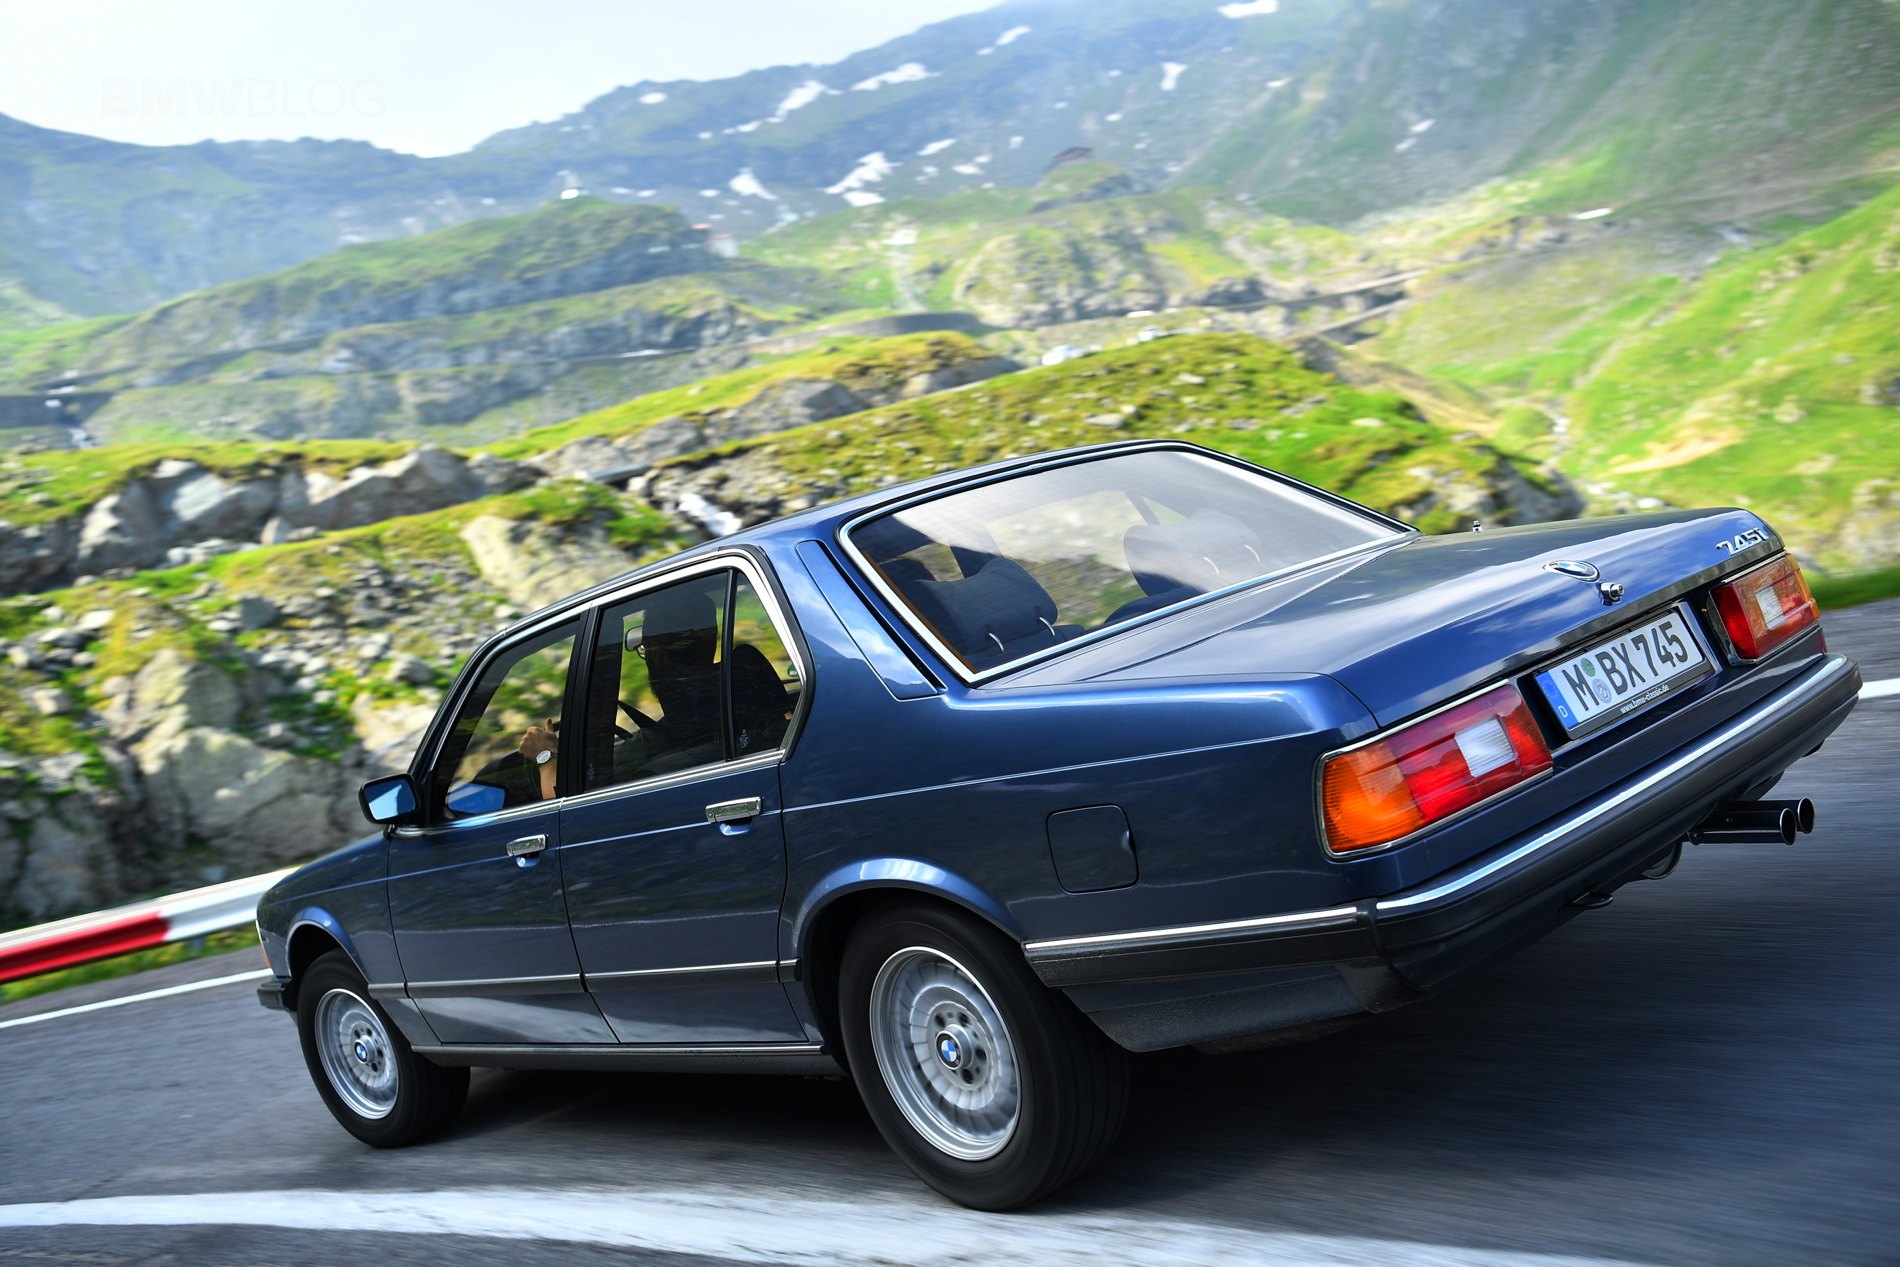 BMW-E32-7-Series-Romania-68.jpg